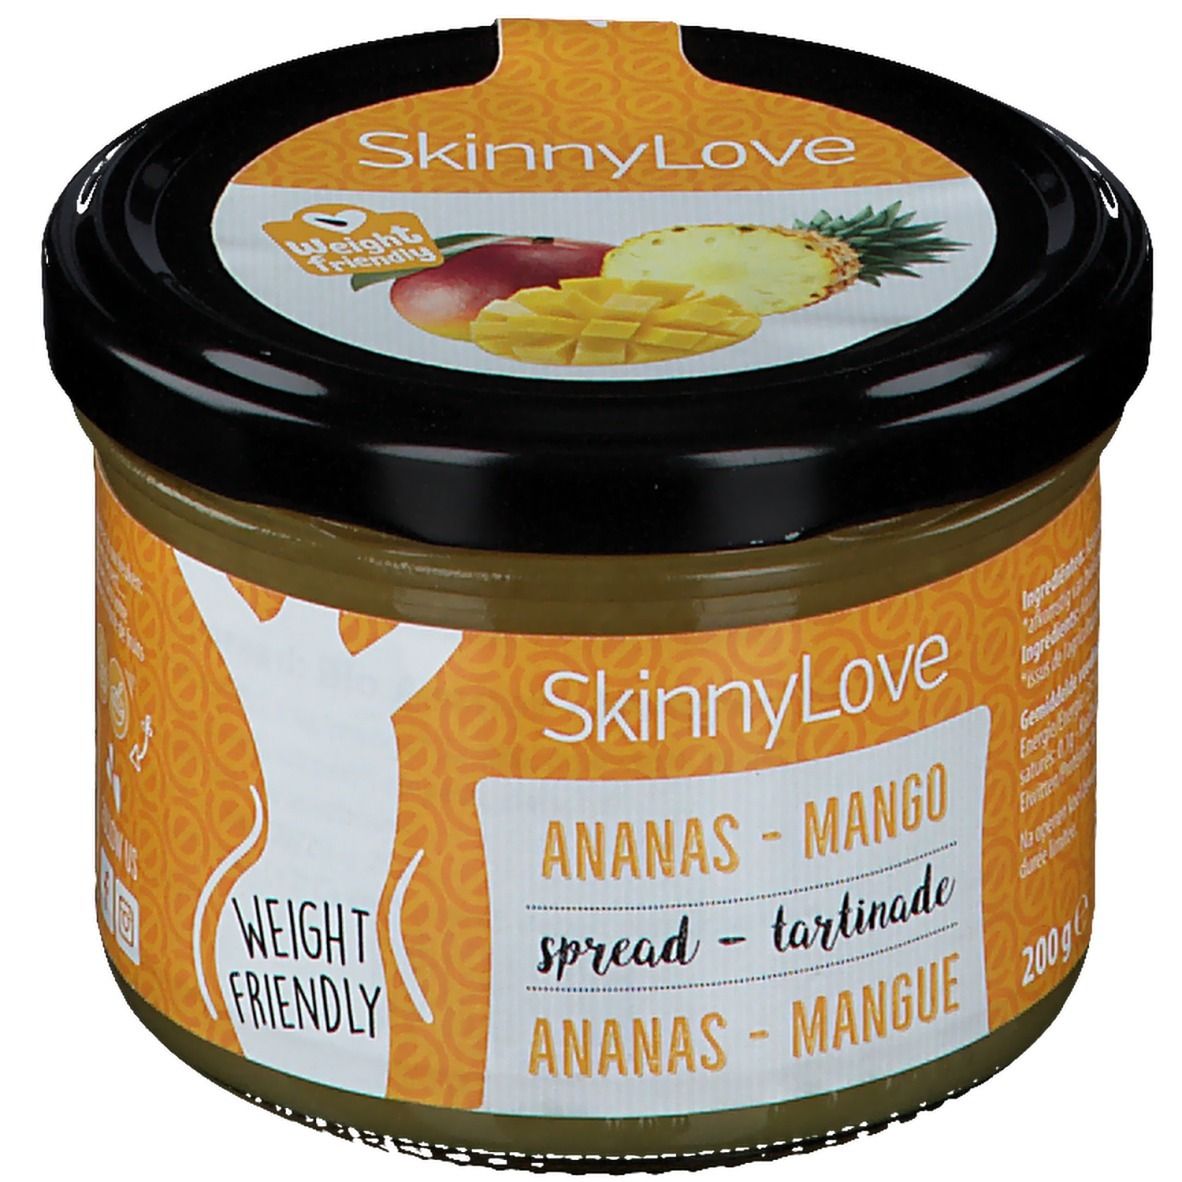 SkinnyLove Tartinade Ananas-Mangue